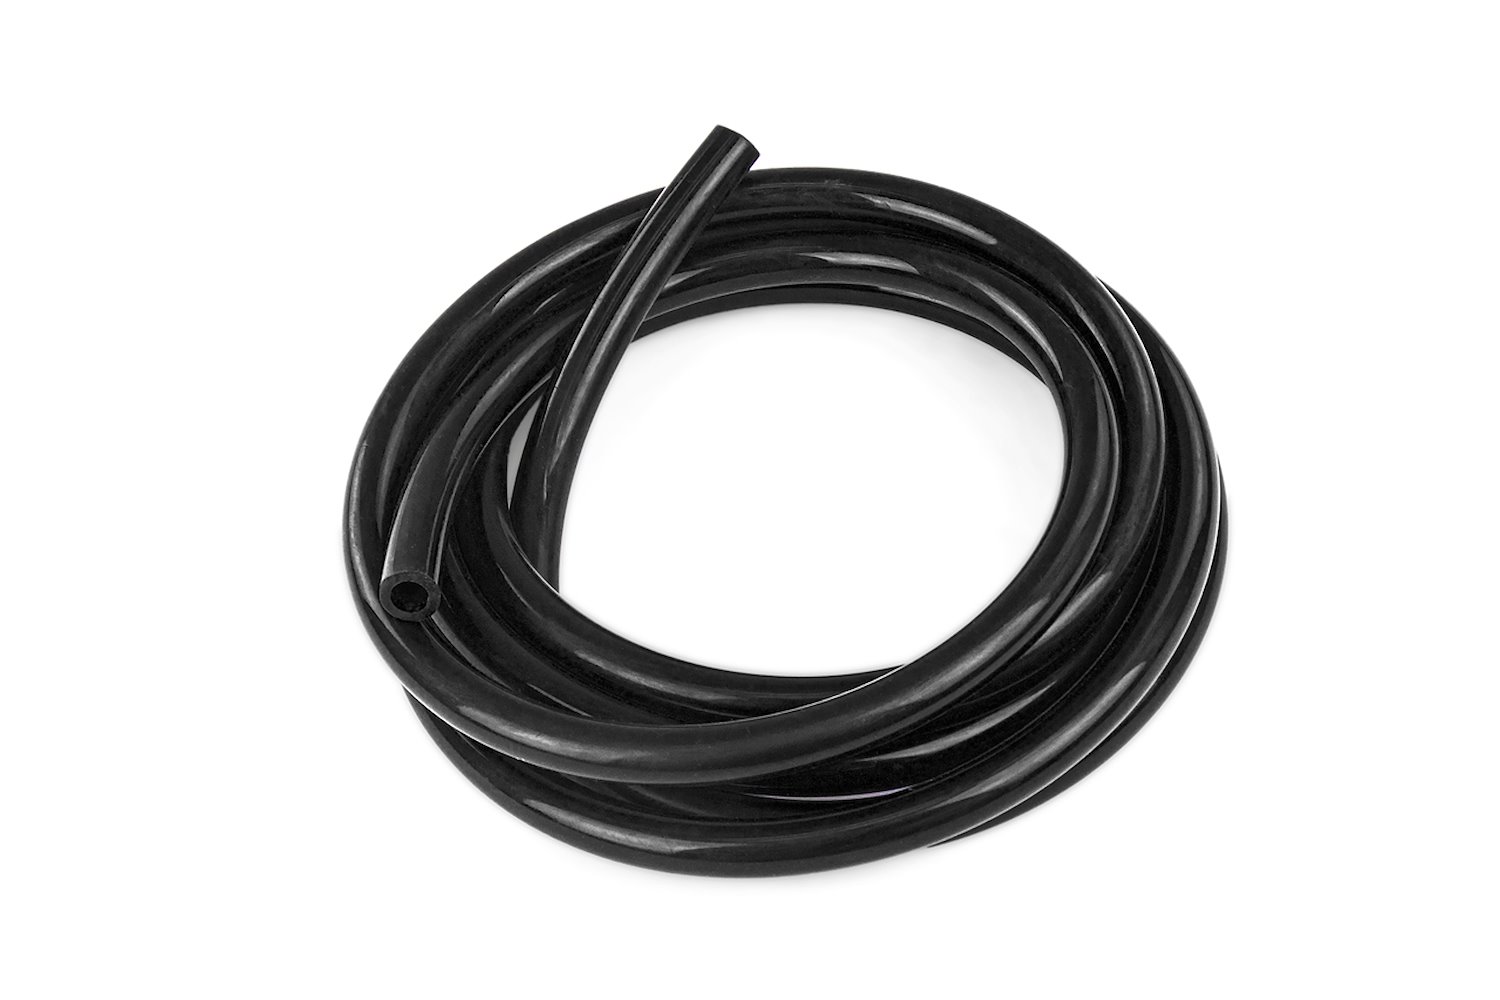 HTSVH4-BLKx10 High-Temperature Silicone Vacuum Hose Tubing, 5/32 in. ID, 10 ft. Roll, Black